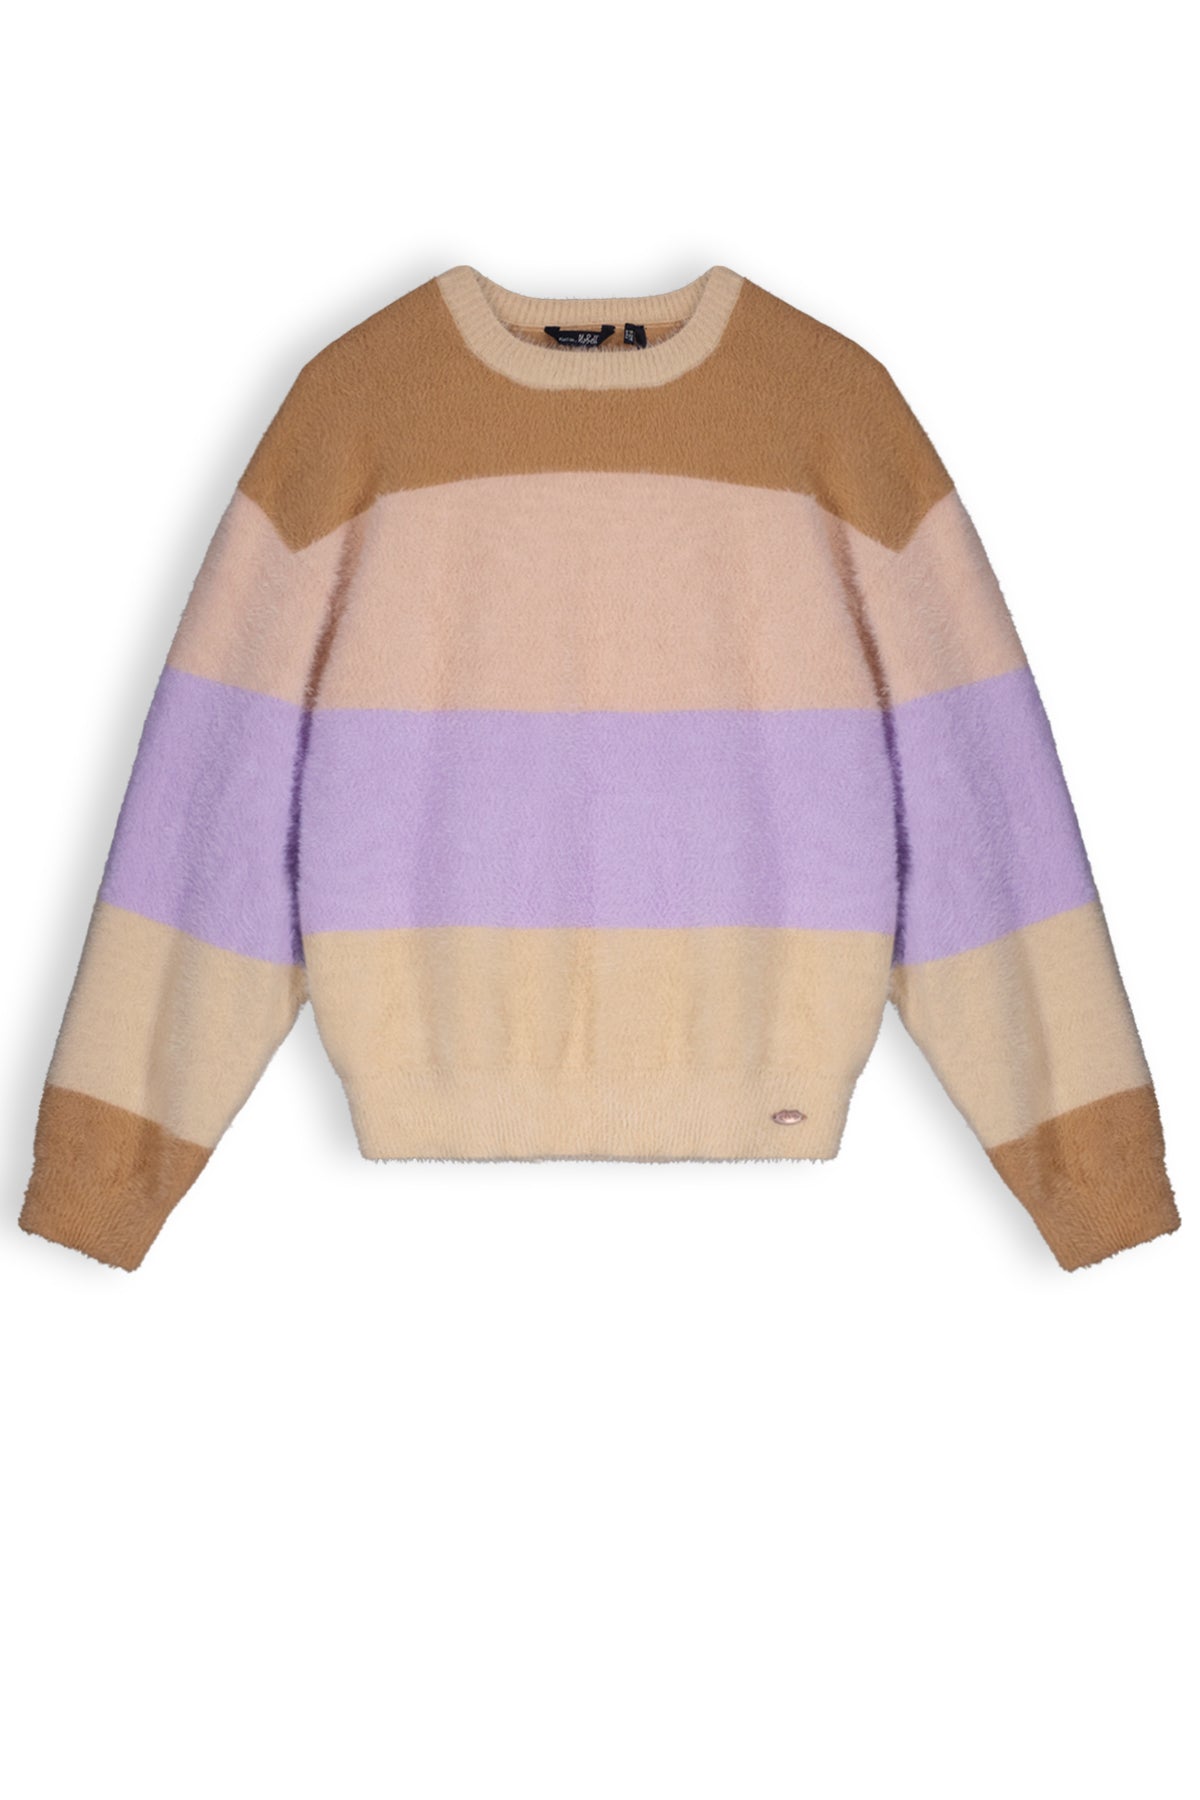 Meisjes Kes girls blocked striped knitted sweater lilac van NoBell in de kleur Lupine Lilac in maat 170-176.